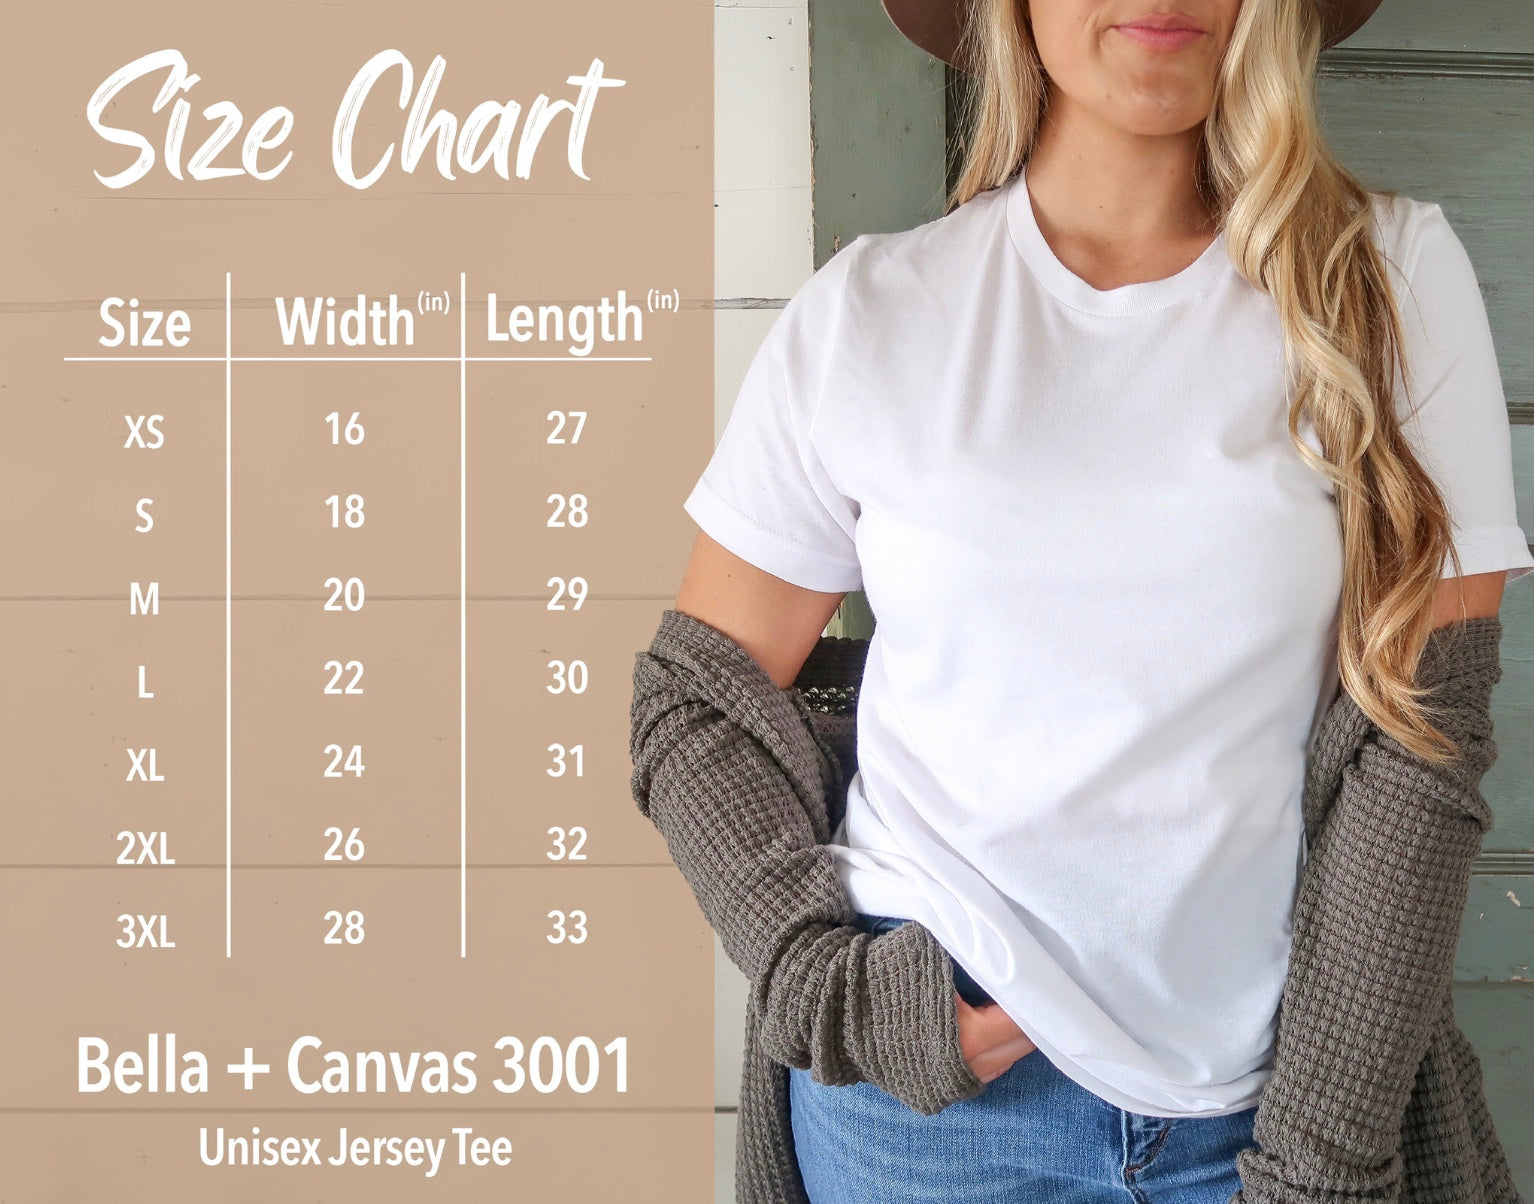 Bella canvas 3002 t-shirt size chart 